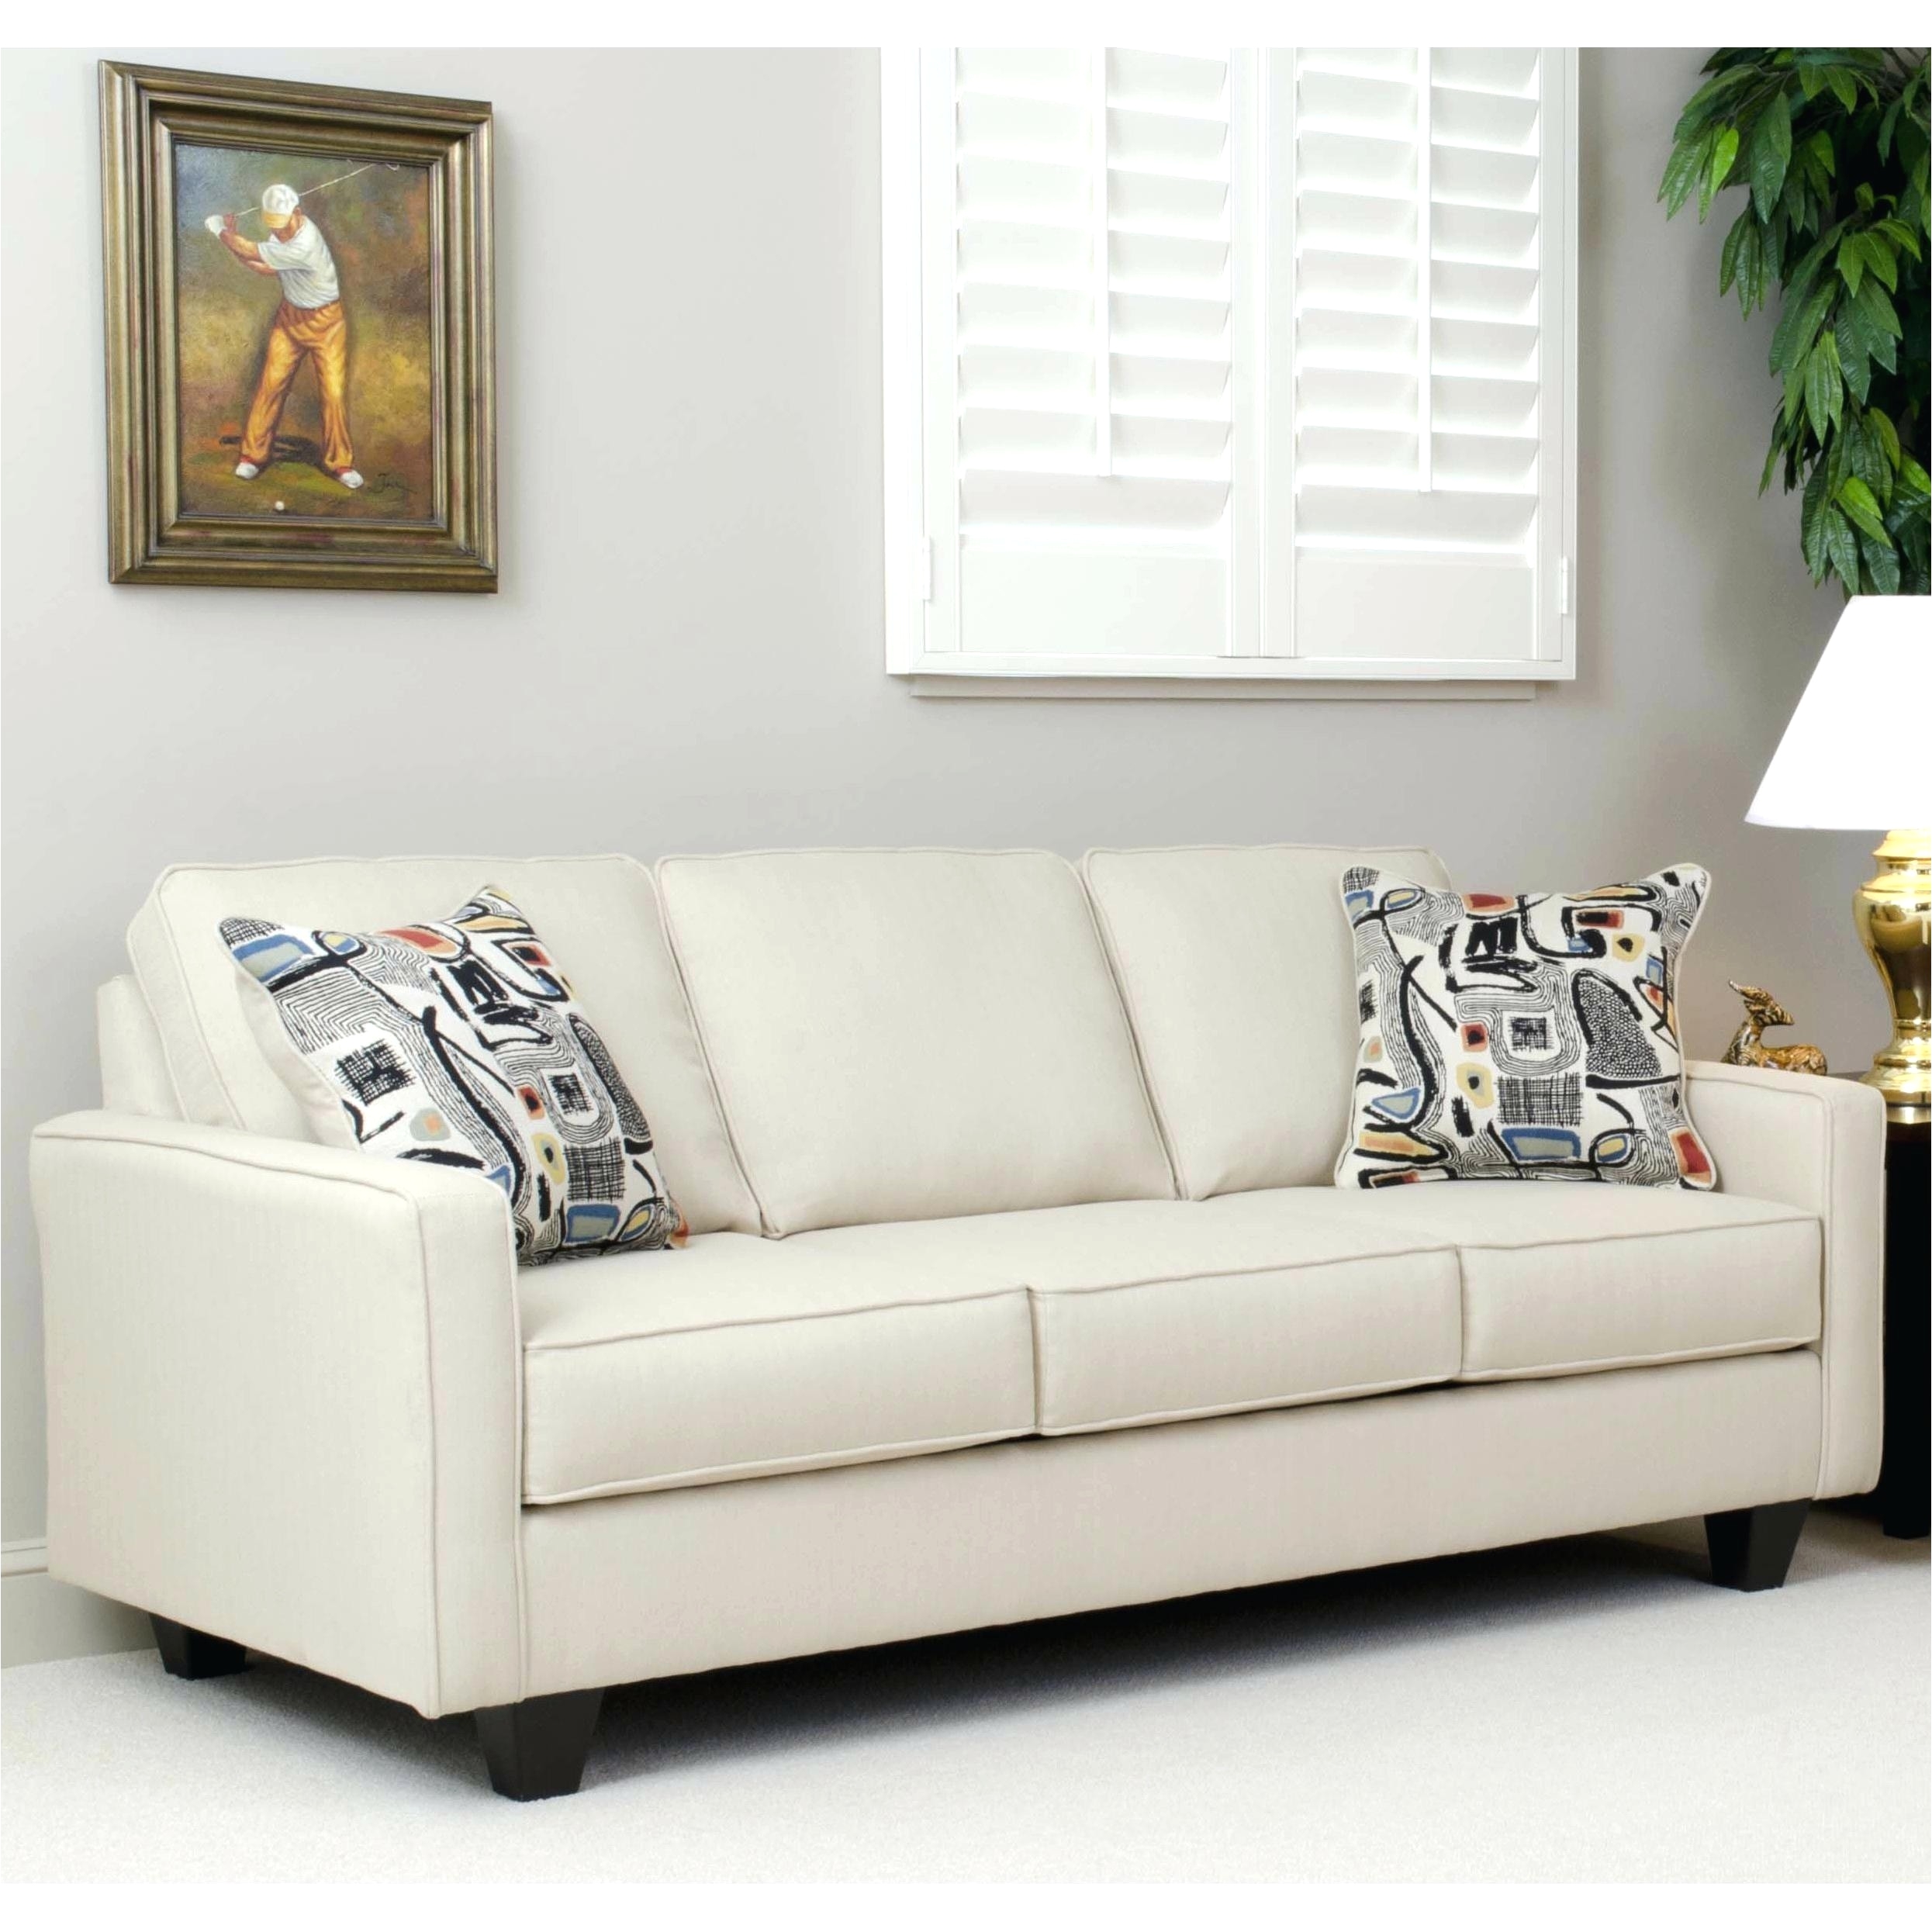 Furniture Stores anderson Indiana Macys Chloe sofa Granite the Best sofa Macys Home Design sofas Macy